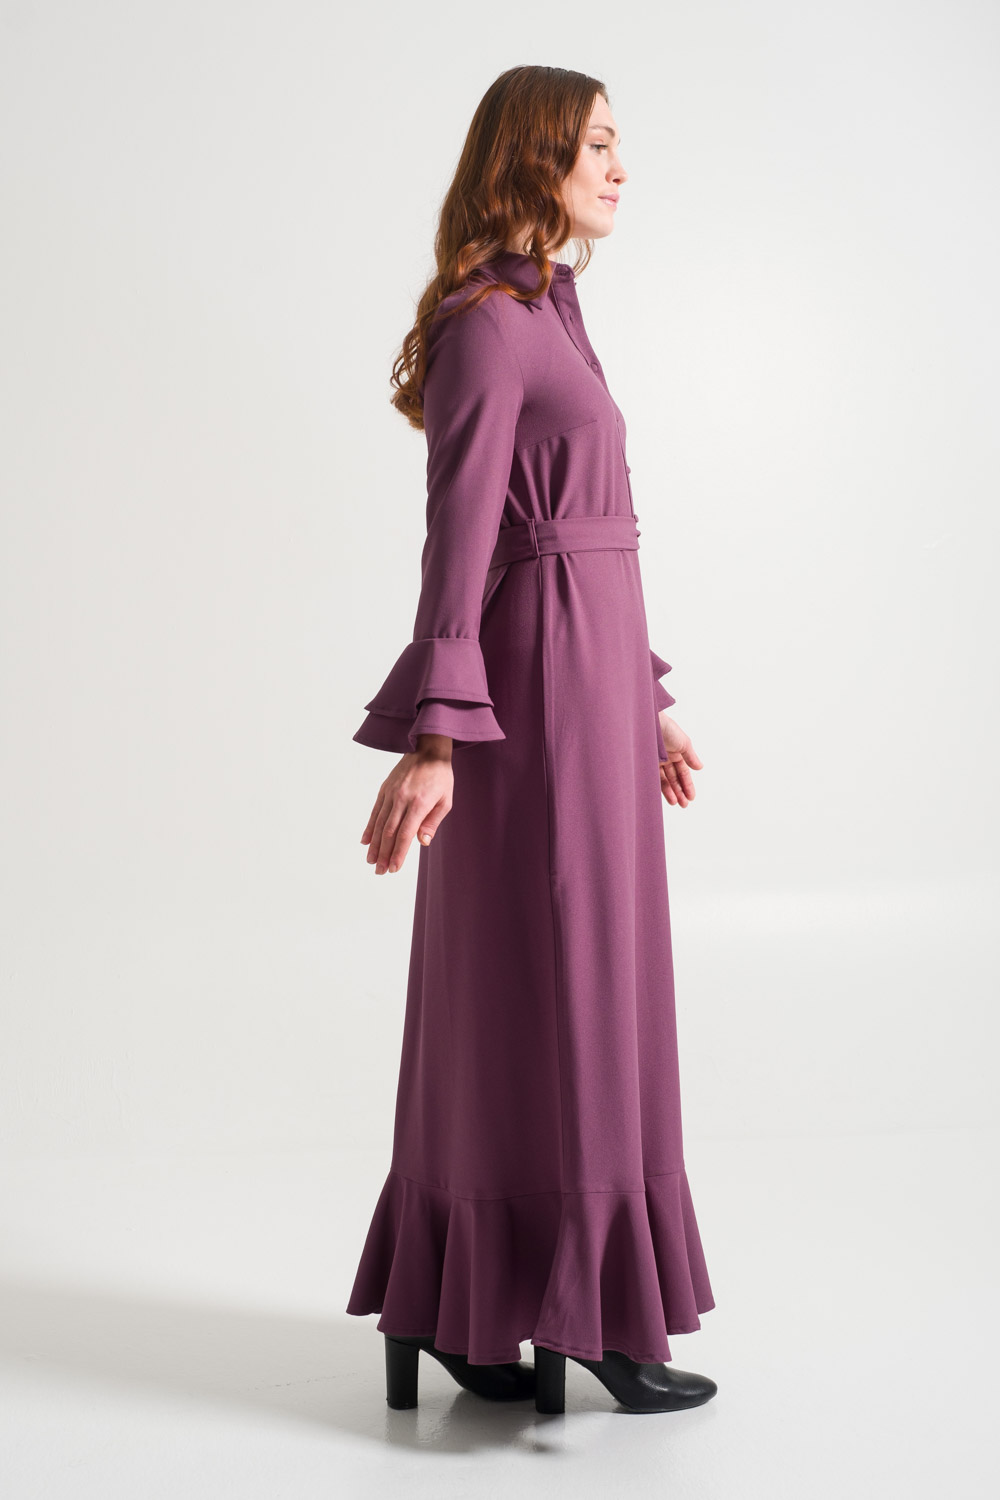 Flywheel Sleeve Purple Dress with Collars